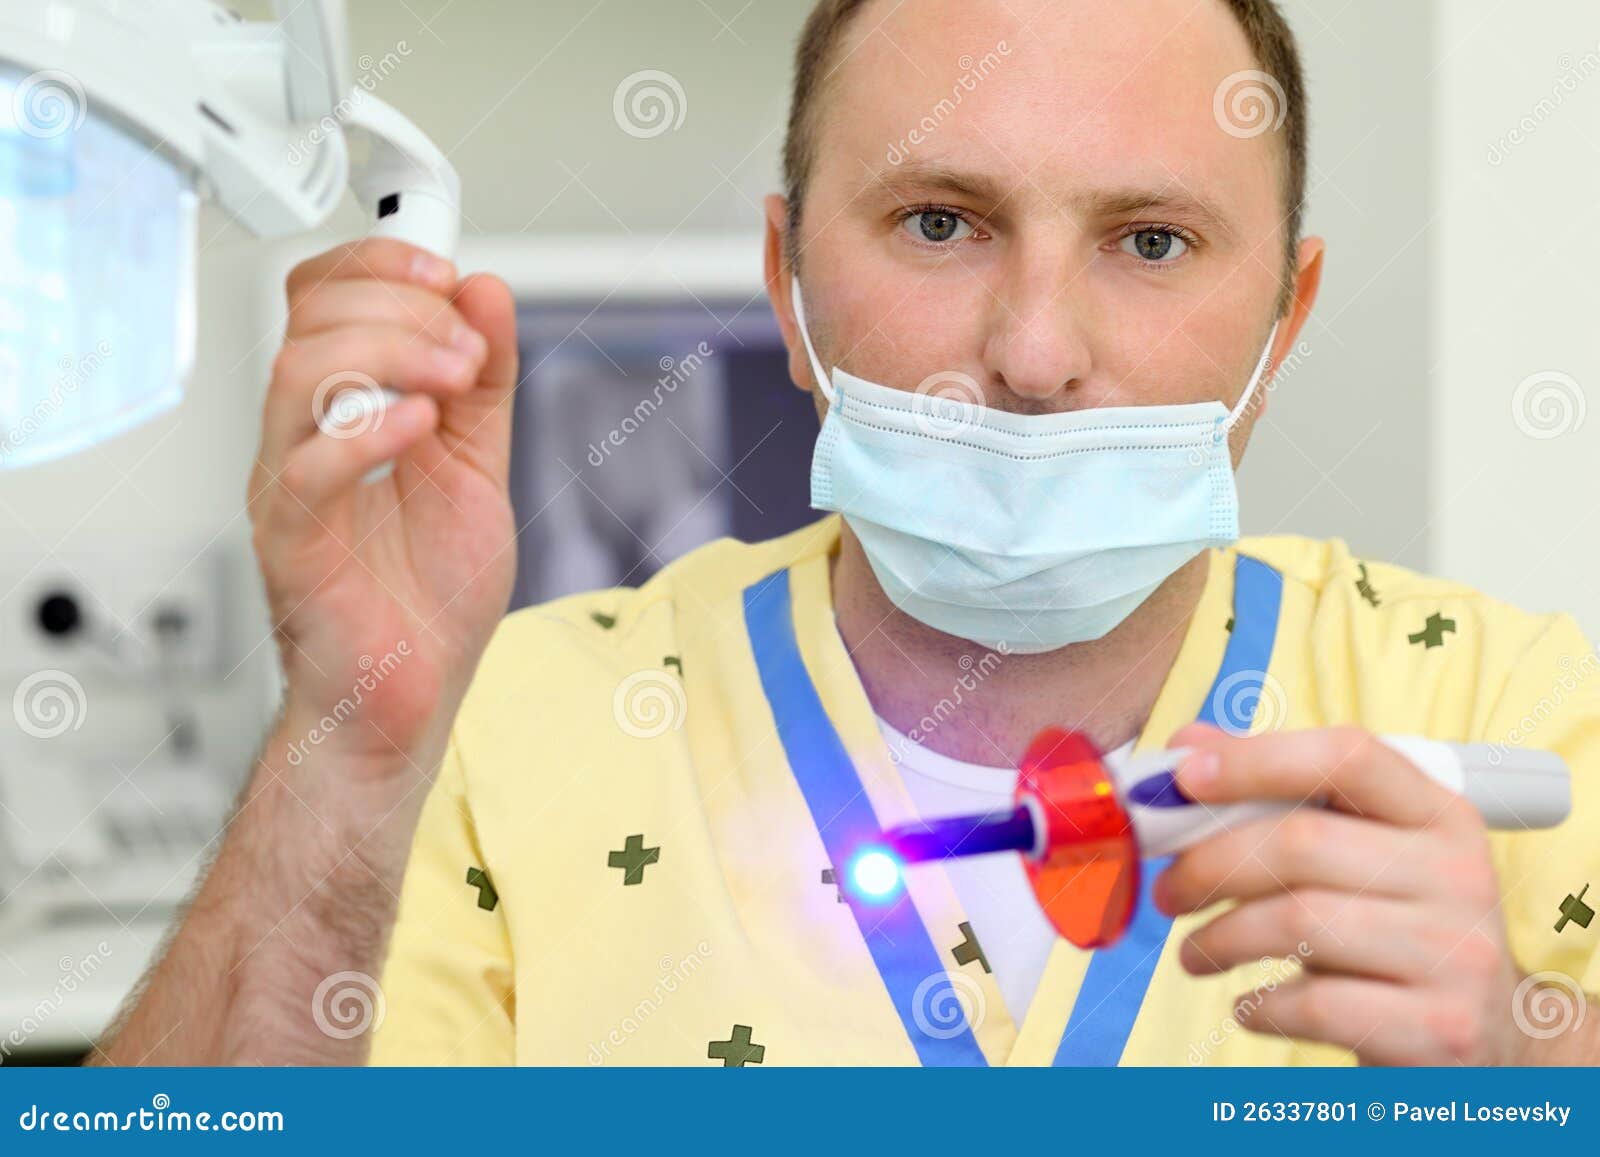 dentist holds ultraviolet curing light tool